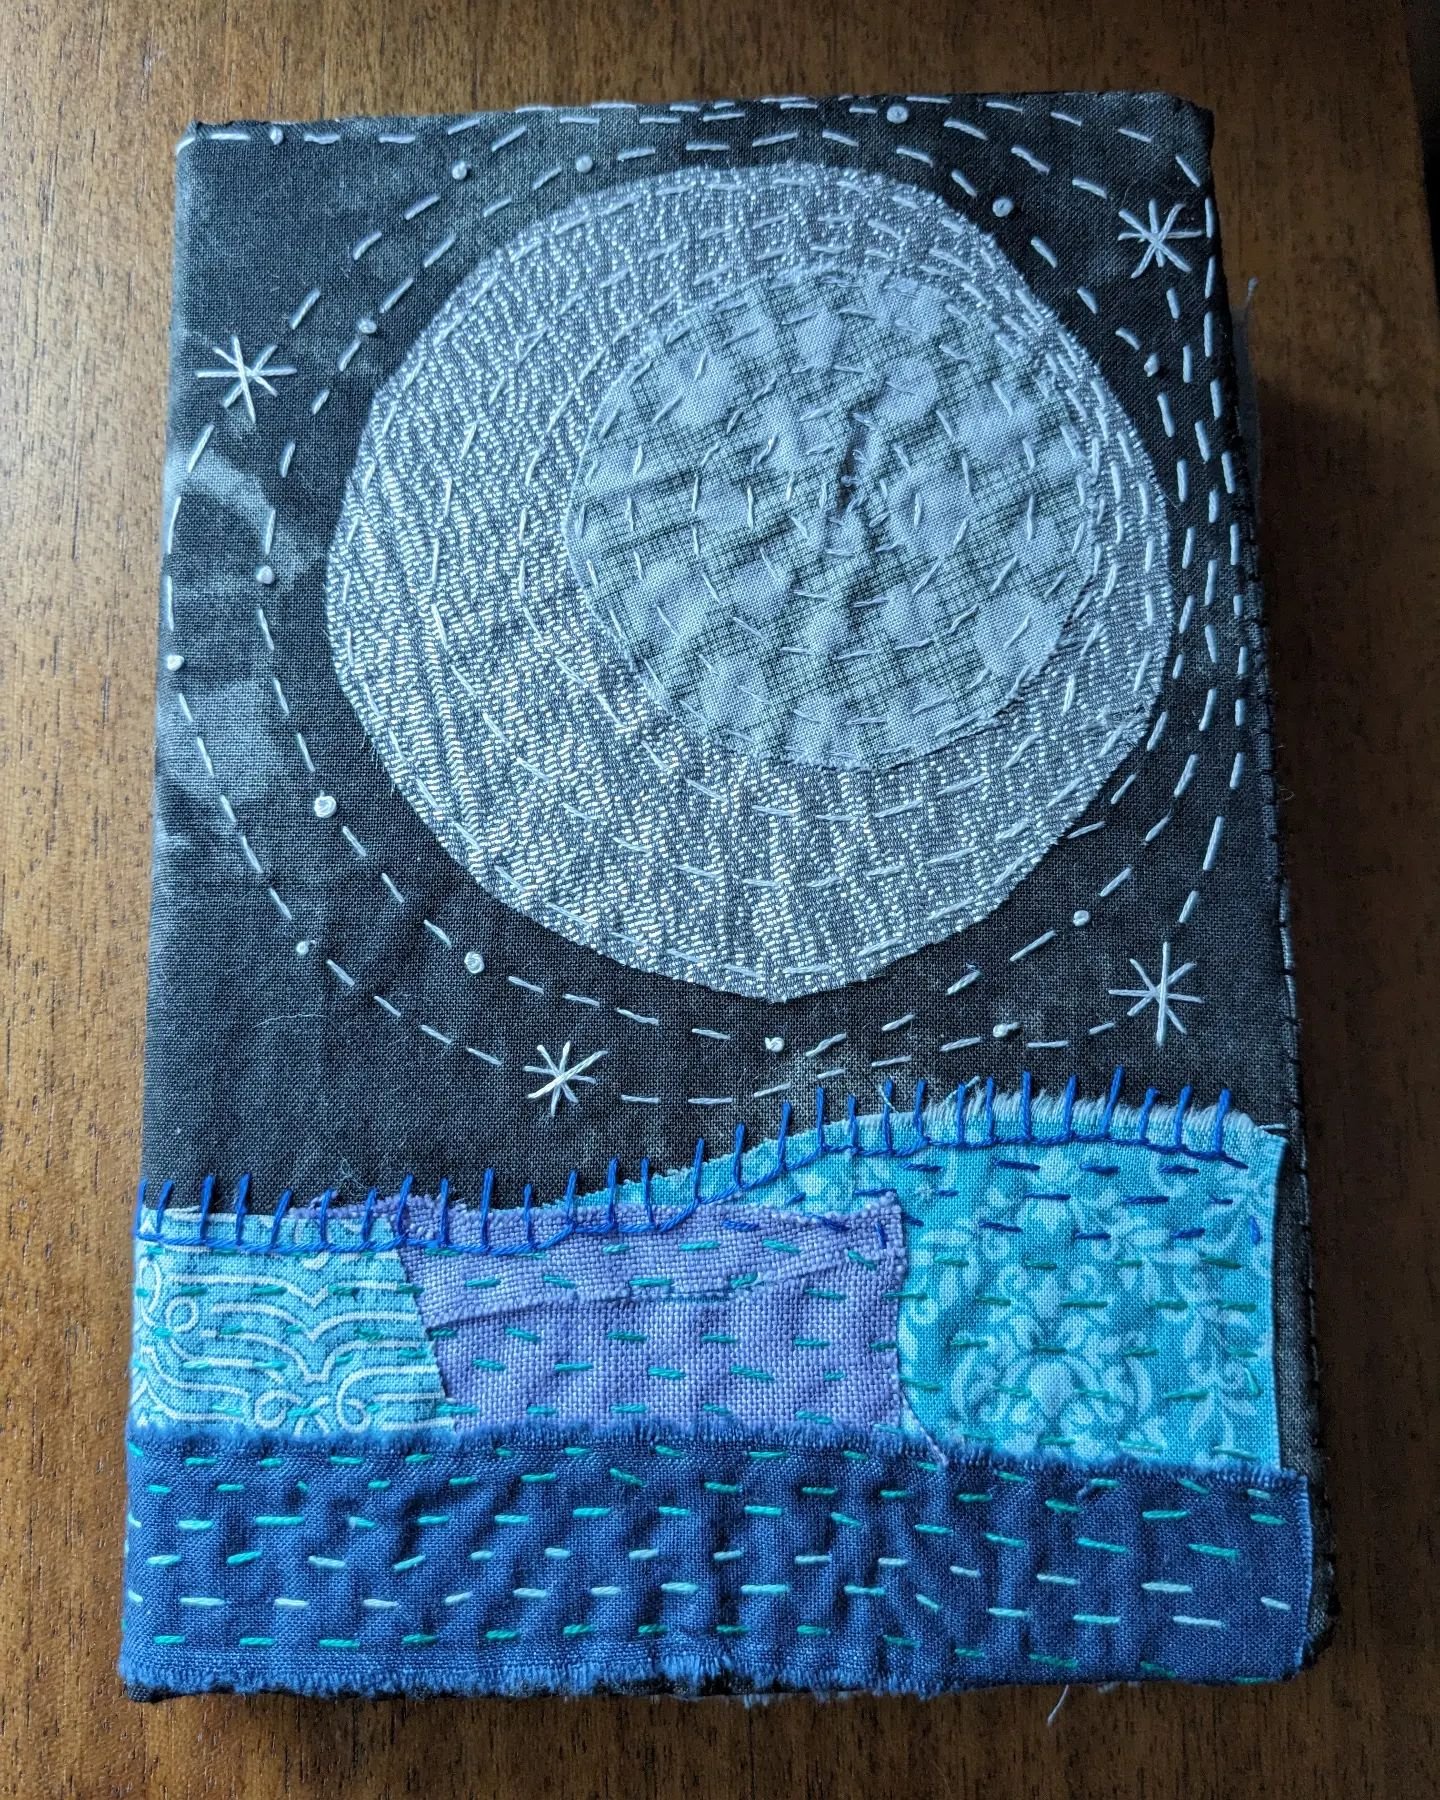 New stitch journal ready to go!
.
.
.
#slowstitch #slowstitching #stitchjournal #needlework #fiberart #embroidery